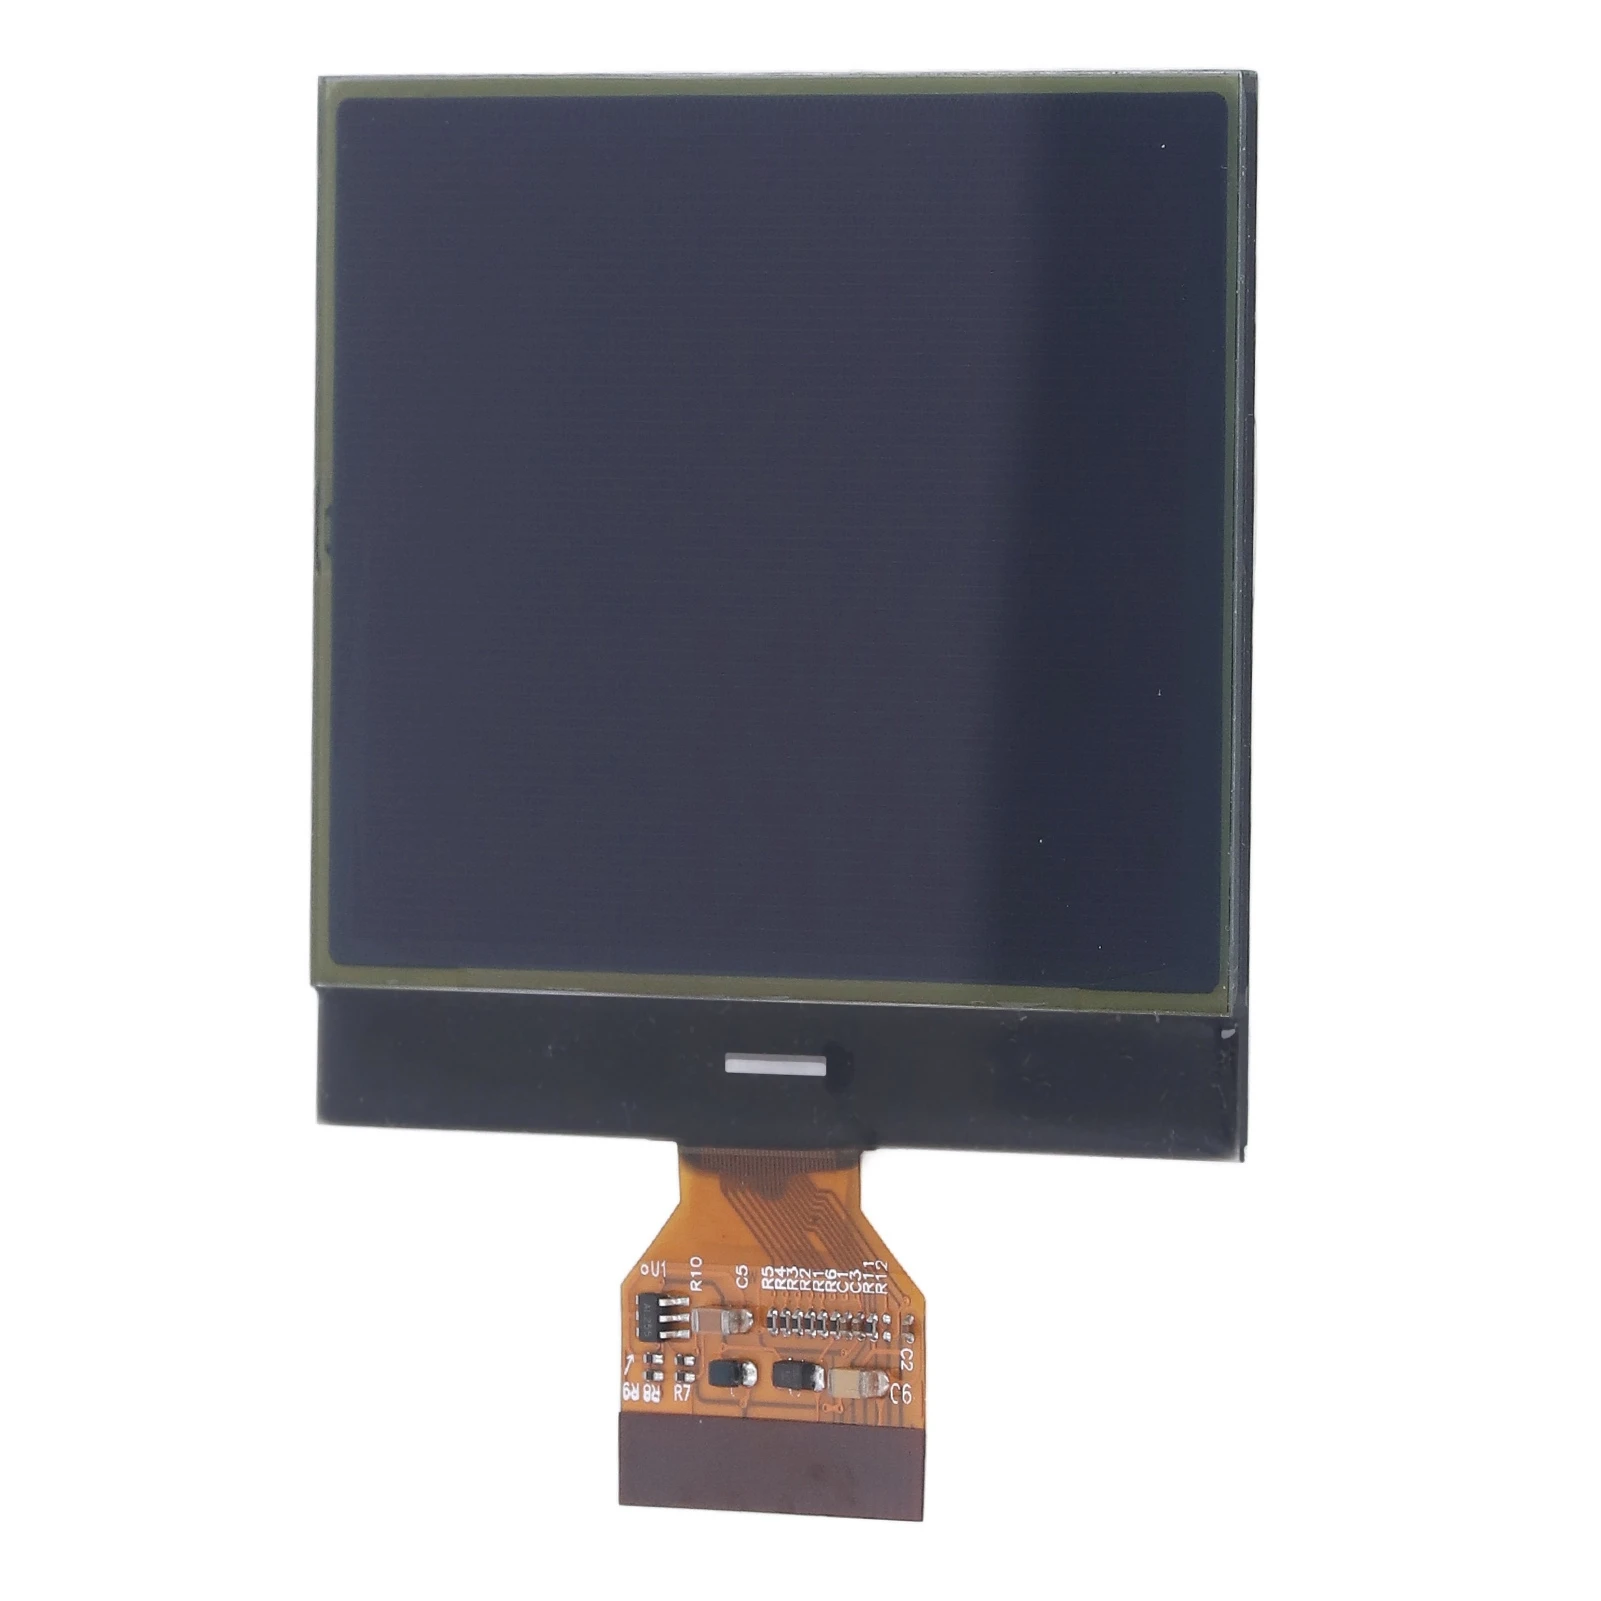 Panel de instrumentos LCD de Cristal FPC Conexión Velocímetro de Pantalla para el Coche . ' - ' . 4